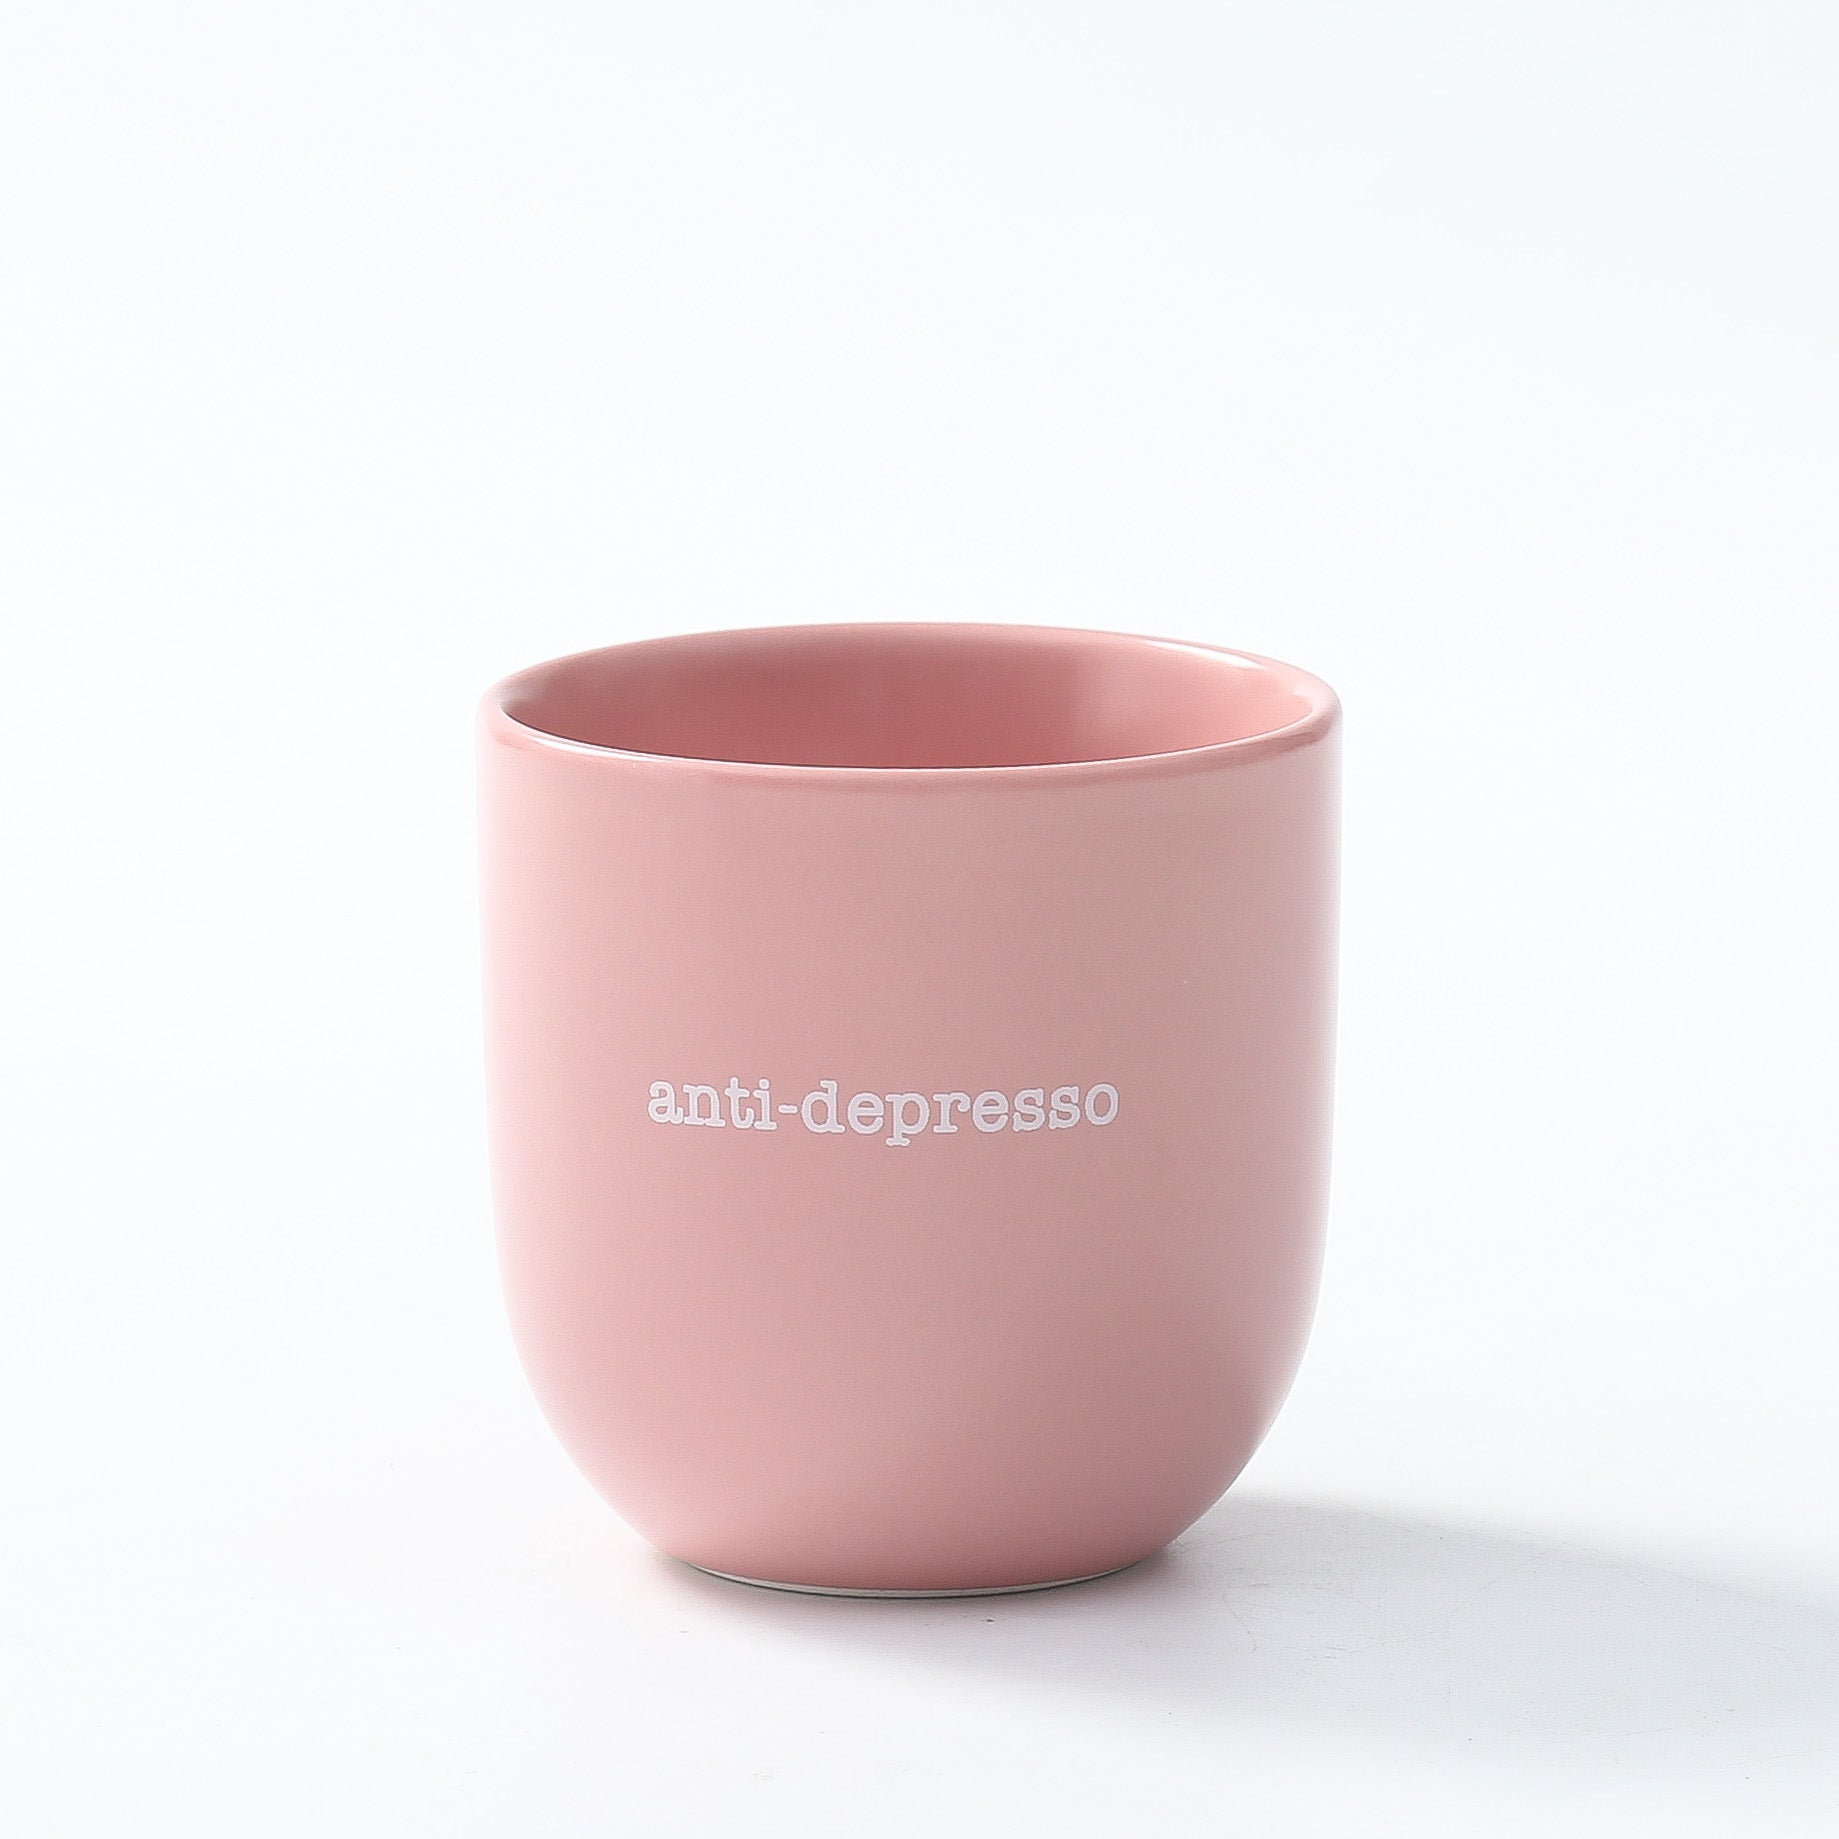 Skodelica - Anti-depresso, light pink